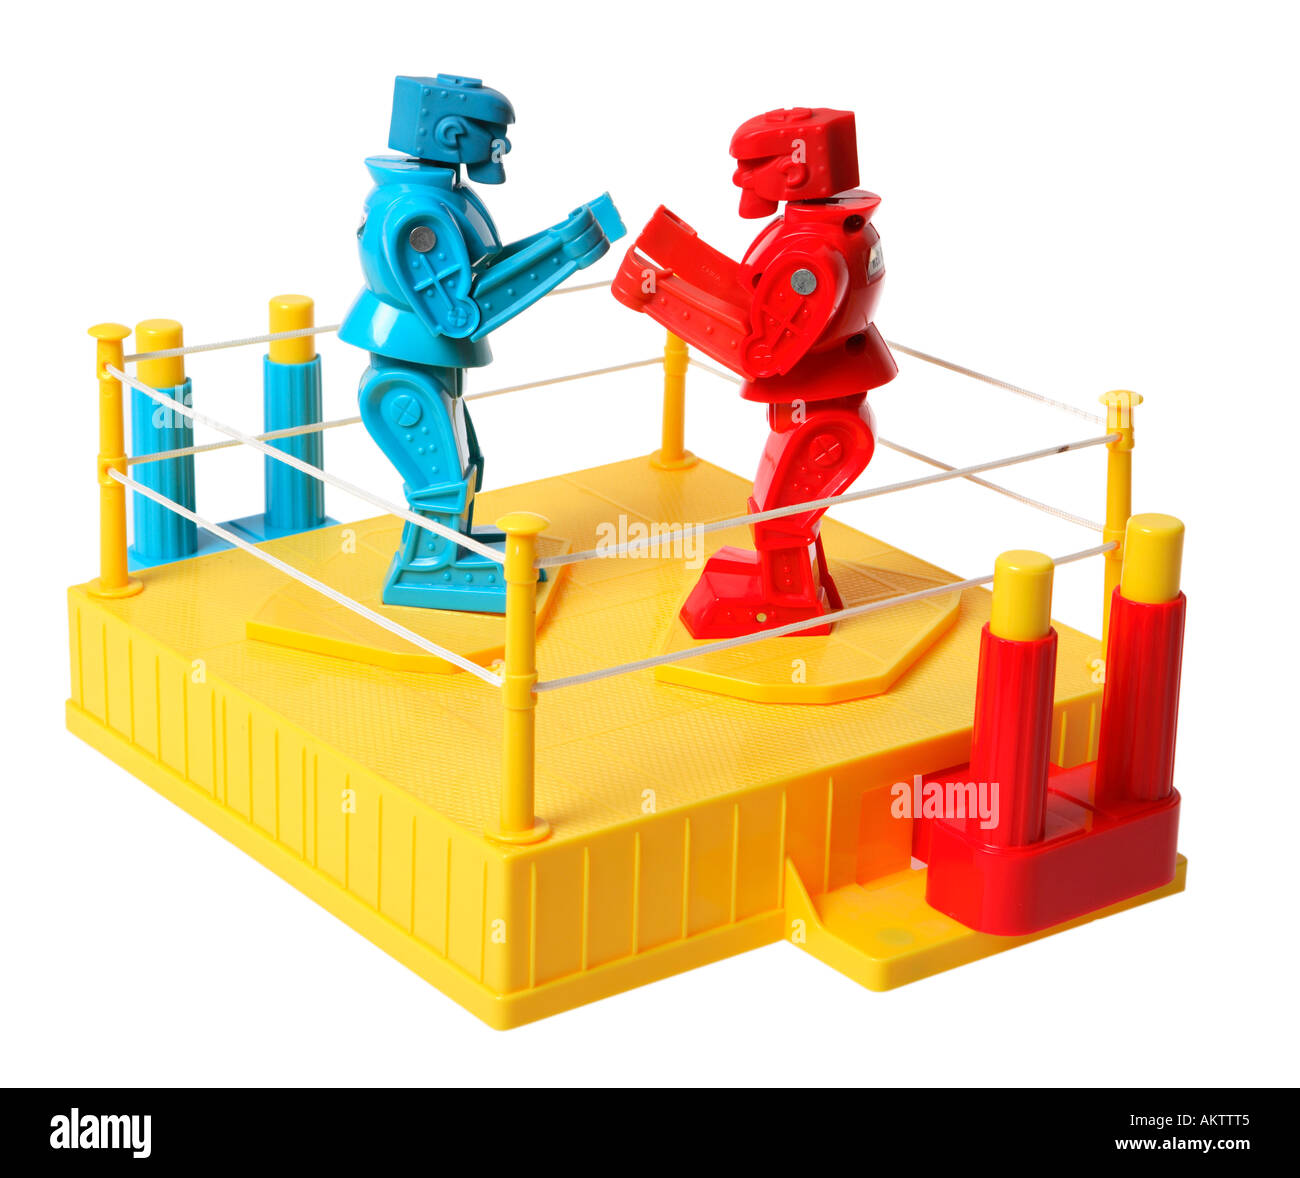 cómo Subproducto dinastía Robot boxing game fotografías e imágenes de alta resolución - Alamy